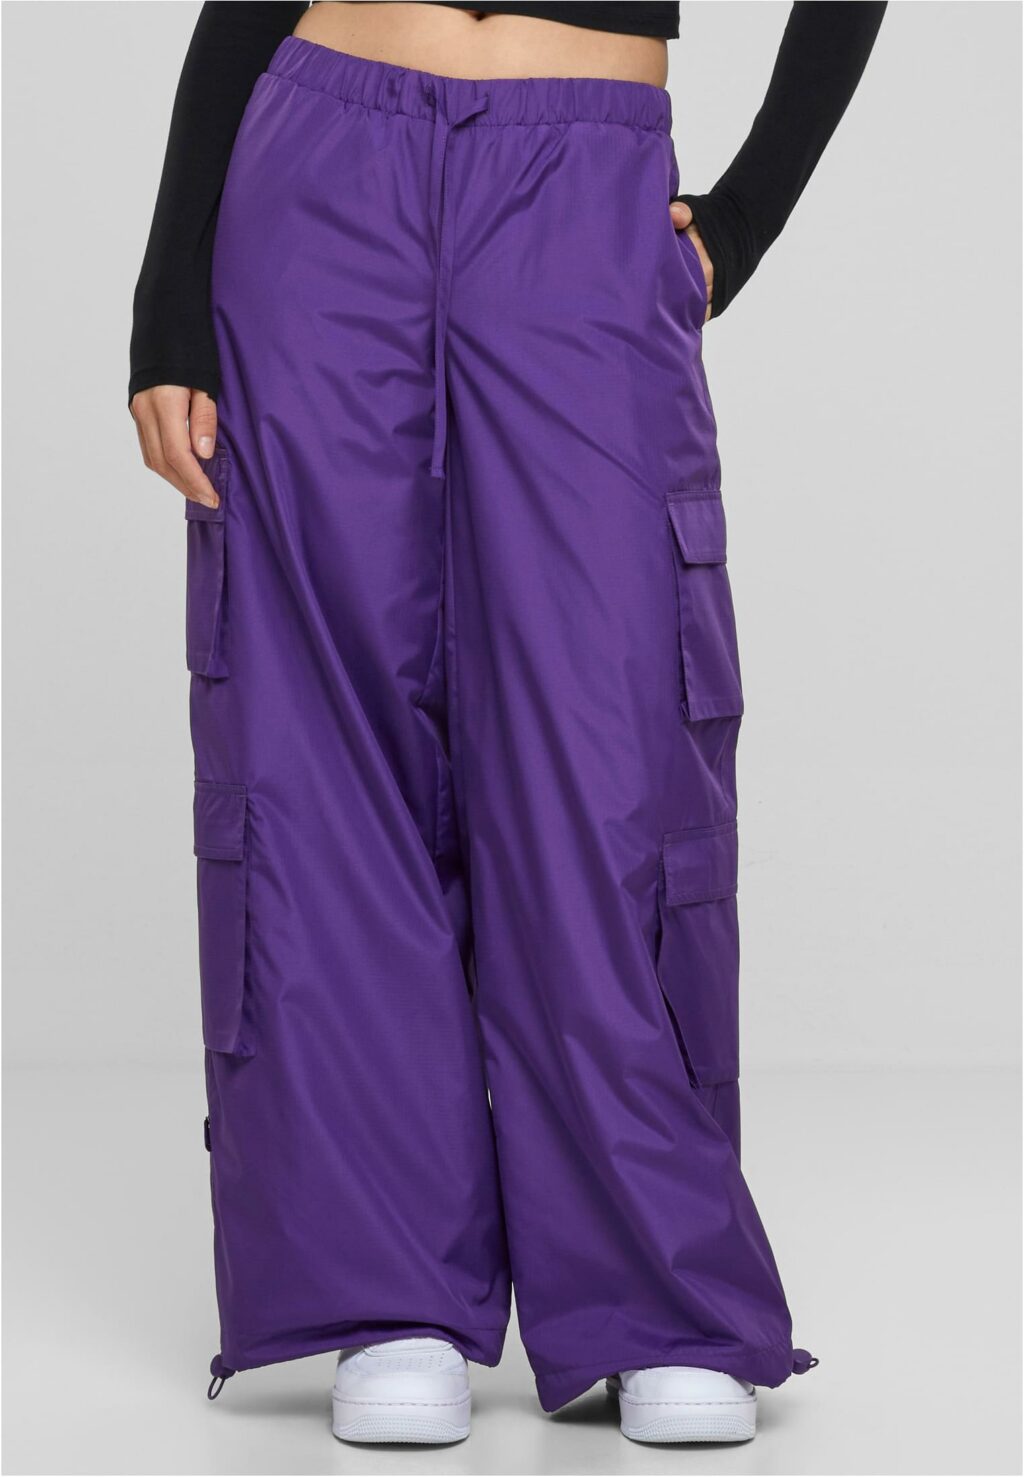 Urban Classics Ladies Ripstop Double Cargo Pants realviolet TB6100